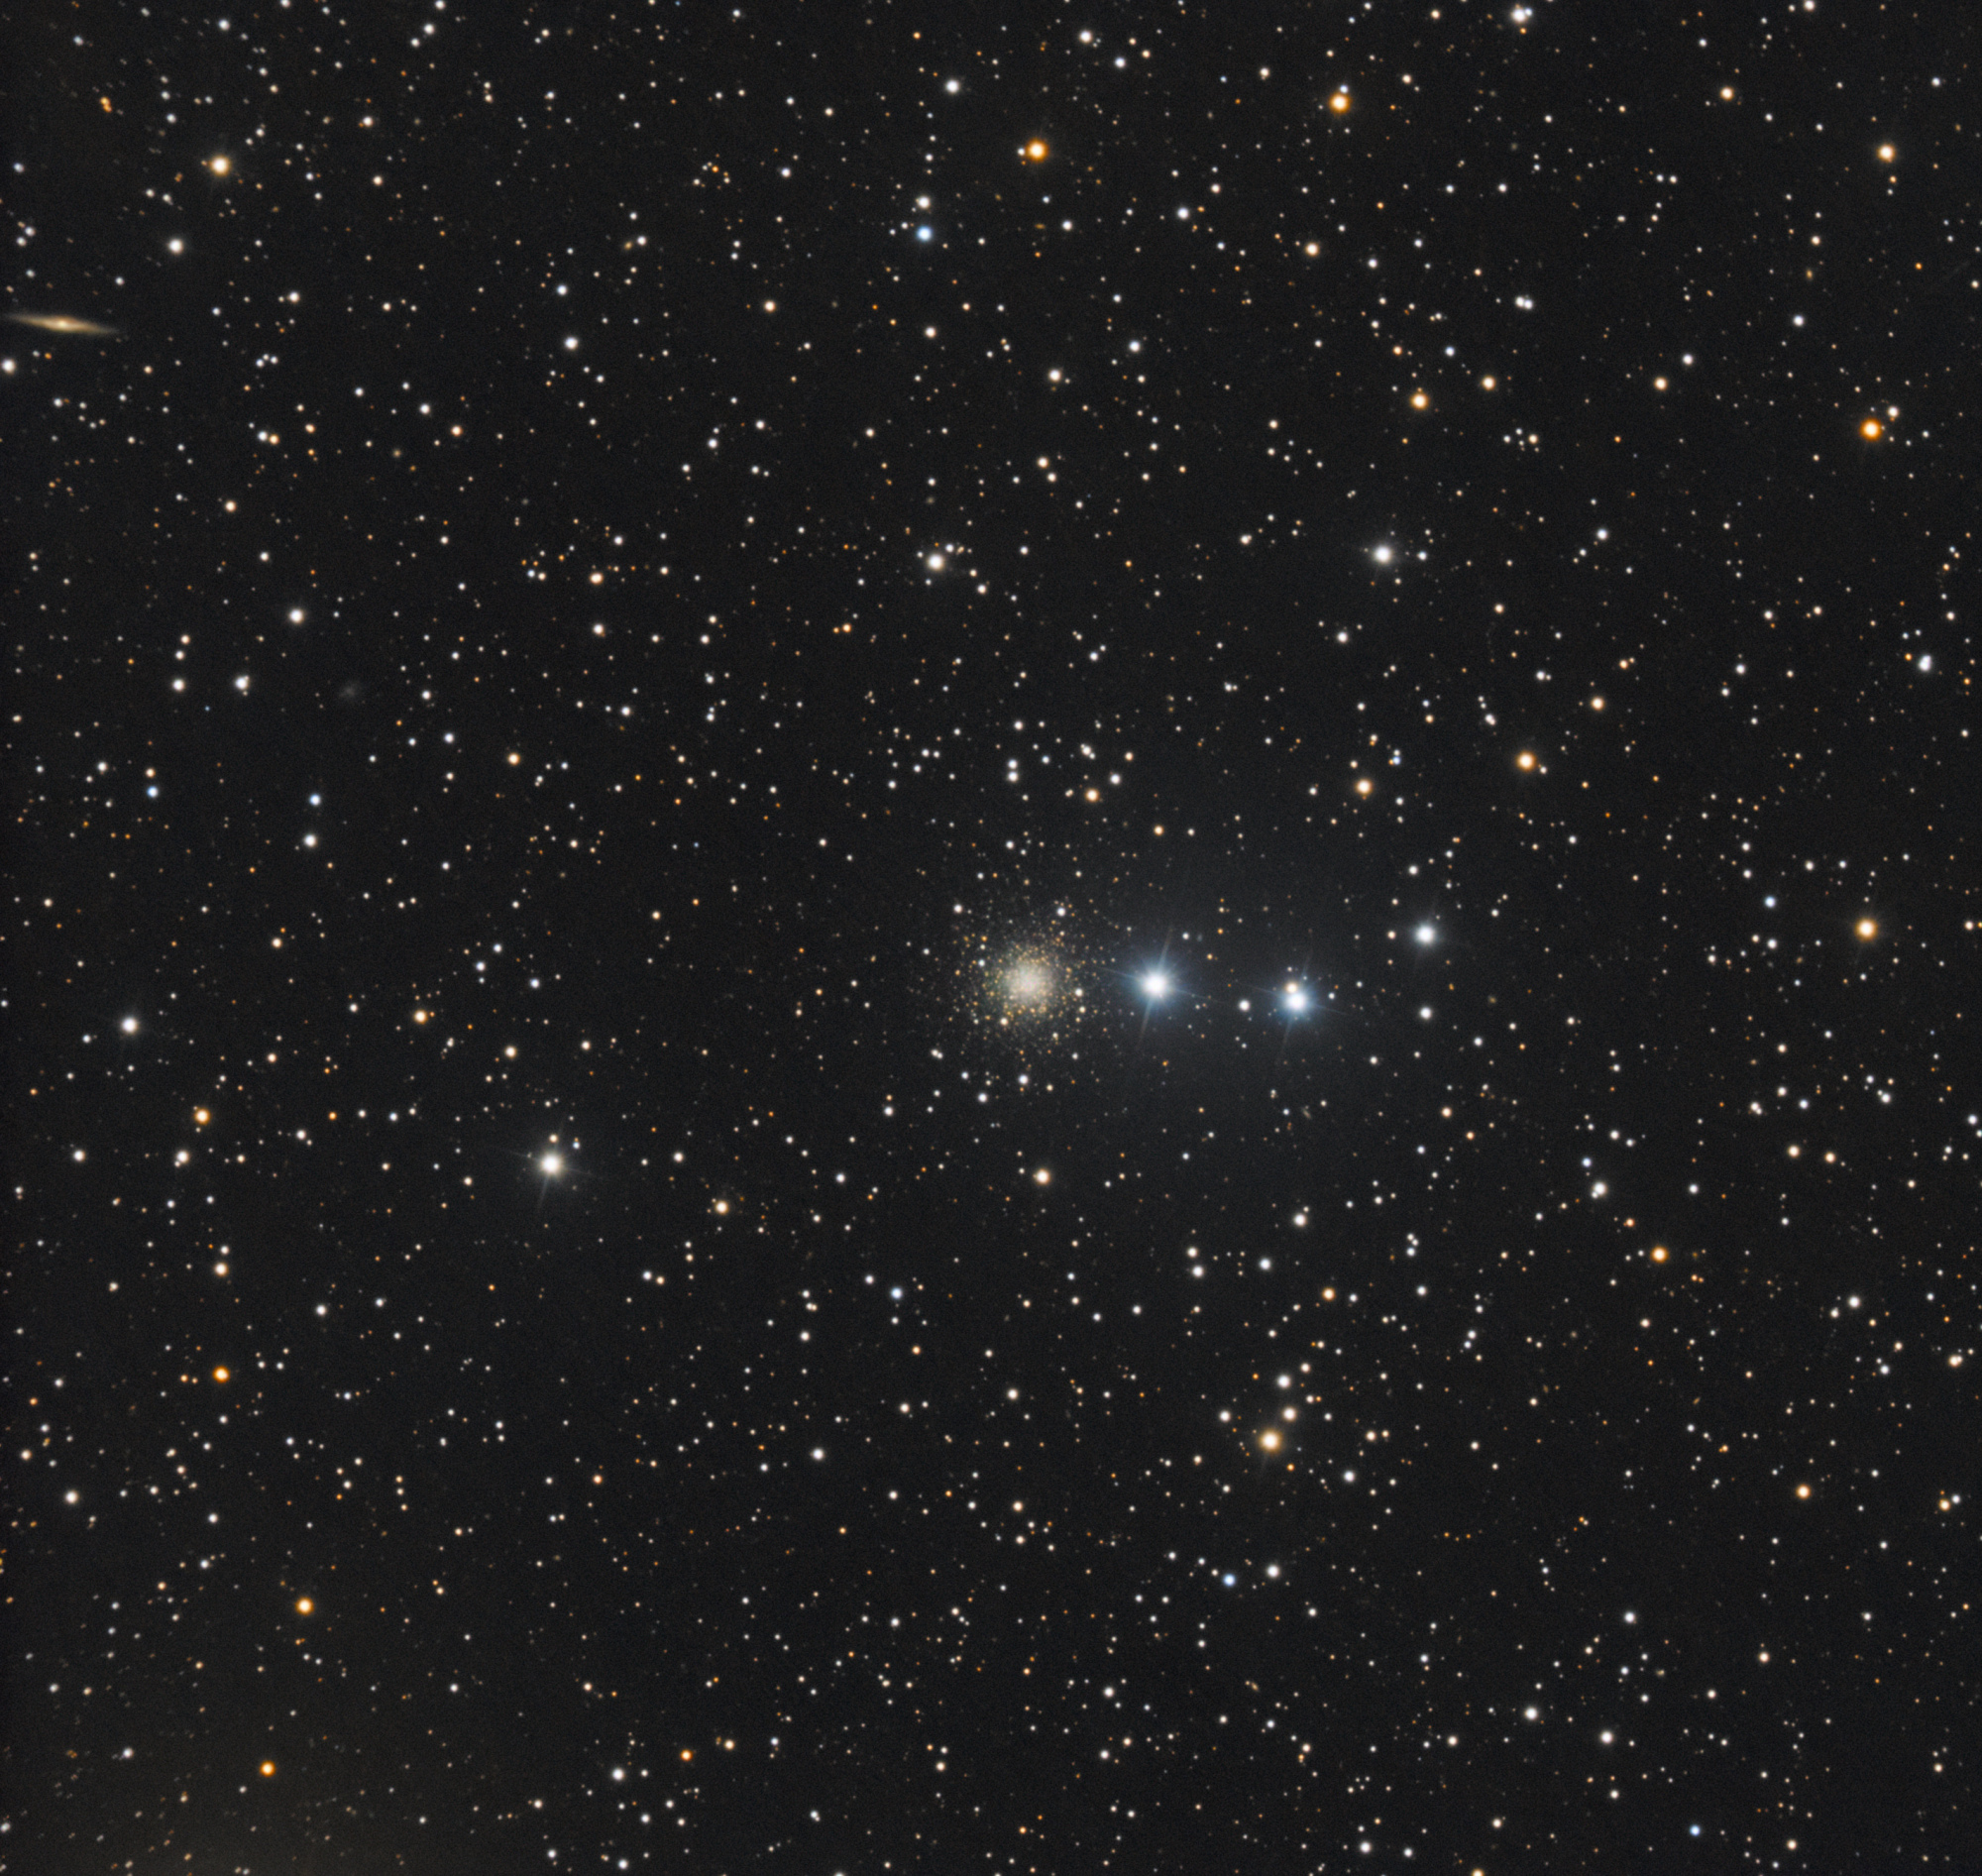 65b622b7c8969_NGC2419_mix-FranckStphane-2-cs5-3-FINAL_sat_comp.thumb.jpg.96effb8a63fd025d16acaf80b9714b42.jpg